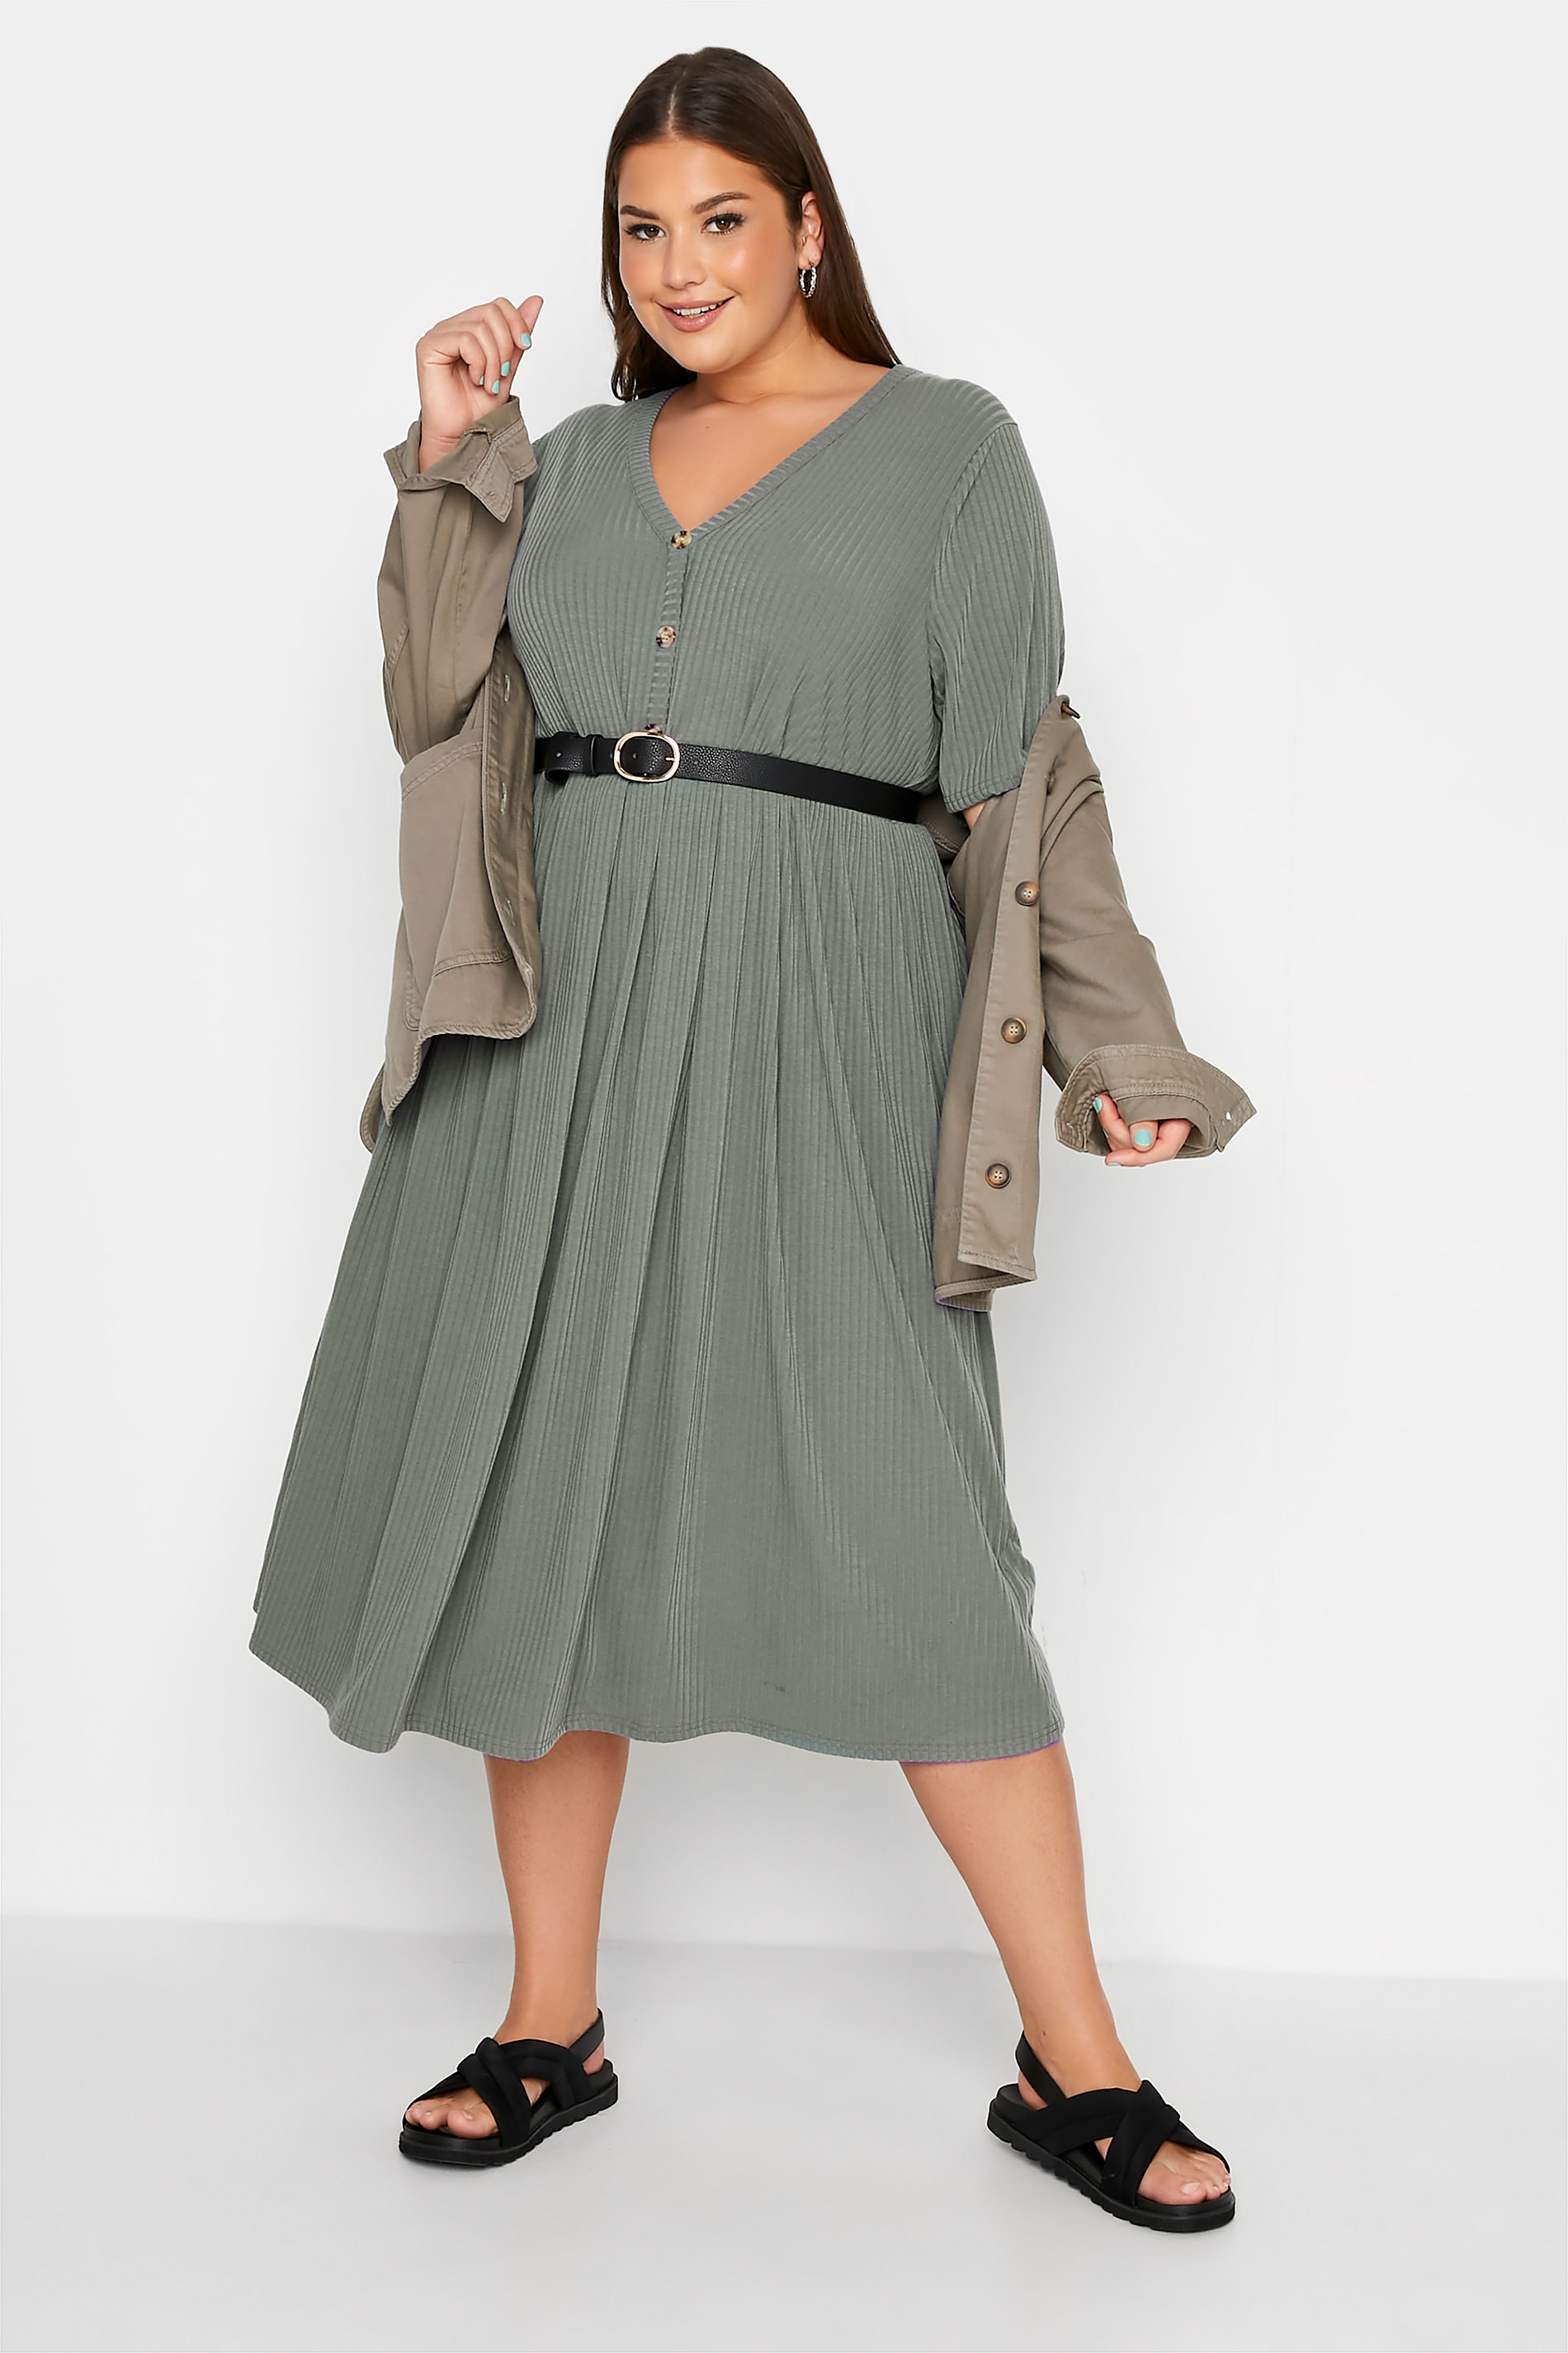 Robes Grande Taille Grande taille  Robes Mi-Longue | LIMITED COLLECTION - Robe Verte Kaki Nervuré Peplum - UN37772